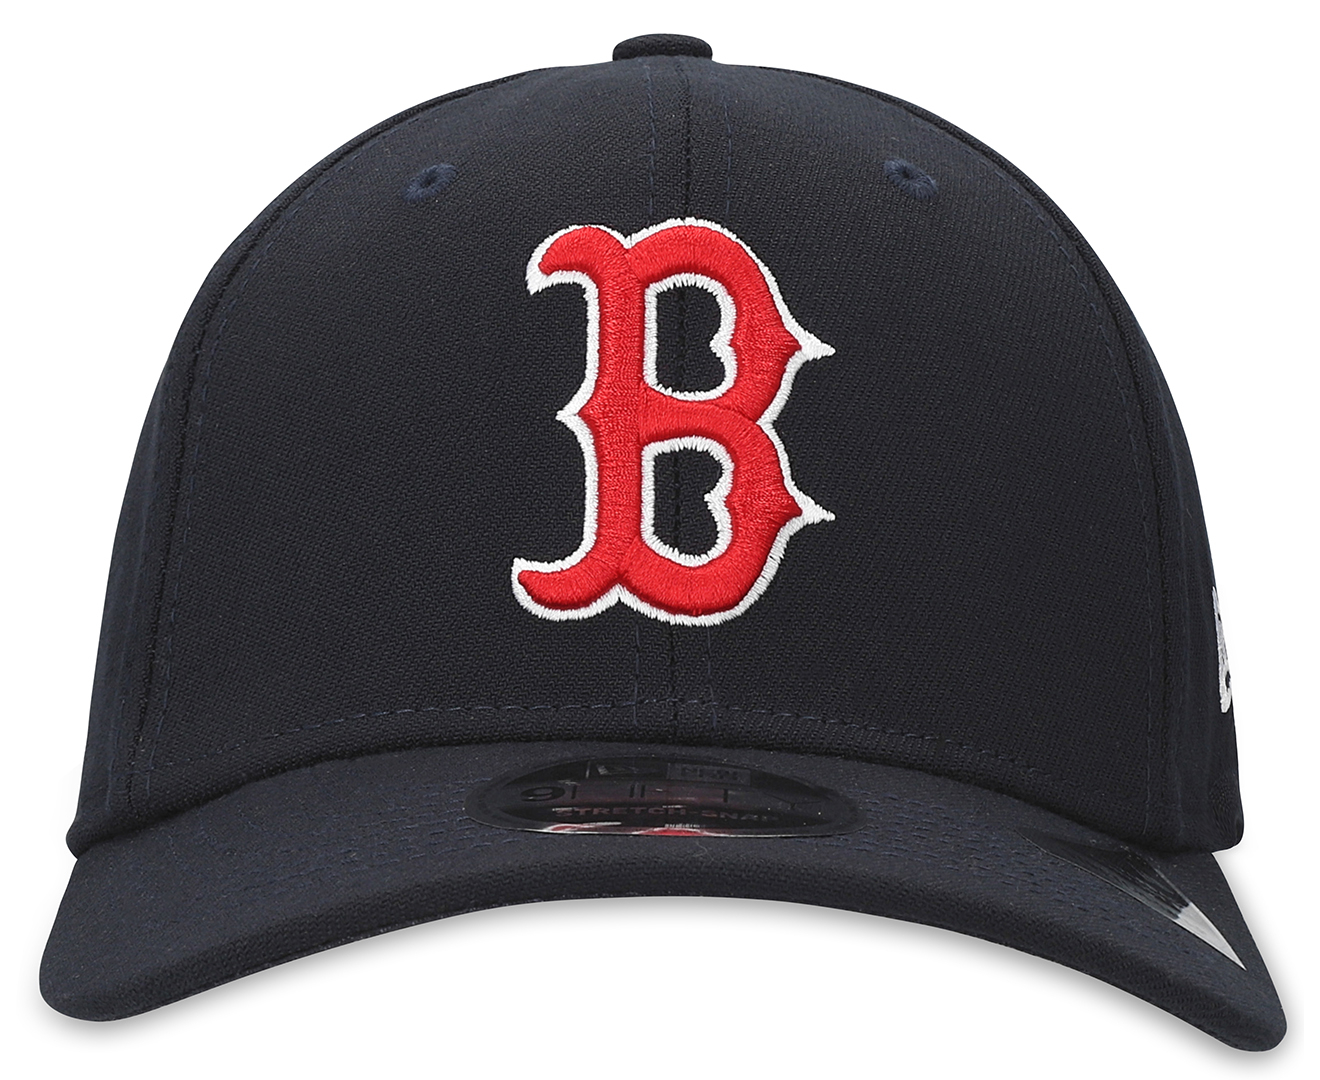 New Era 9FORTY Boston Red Sox Cap - Black